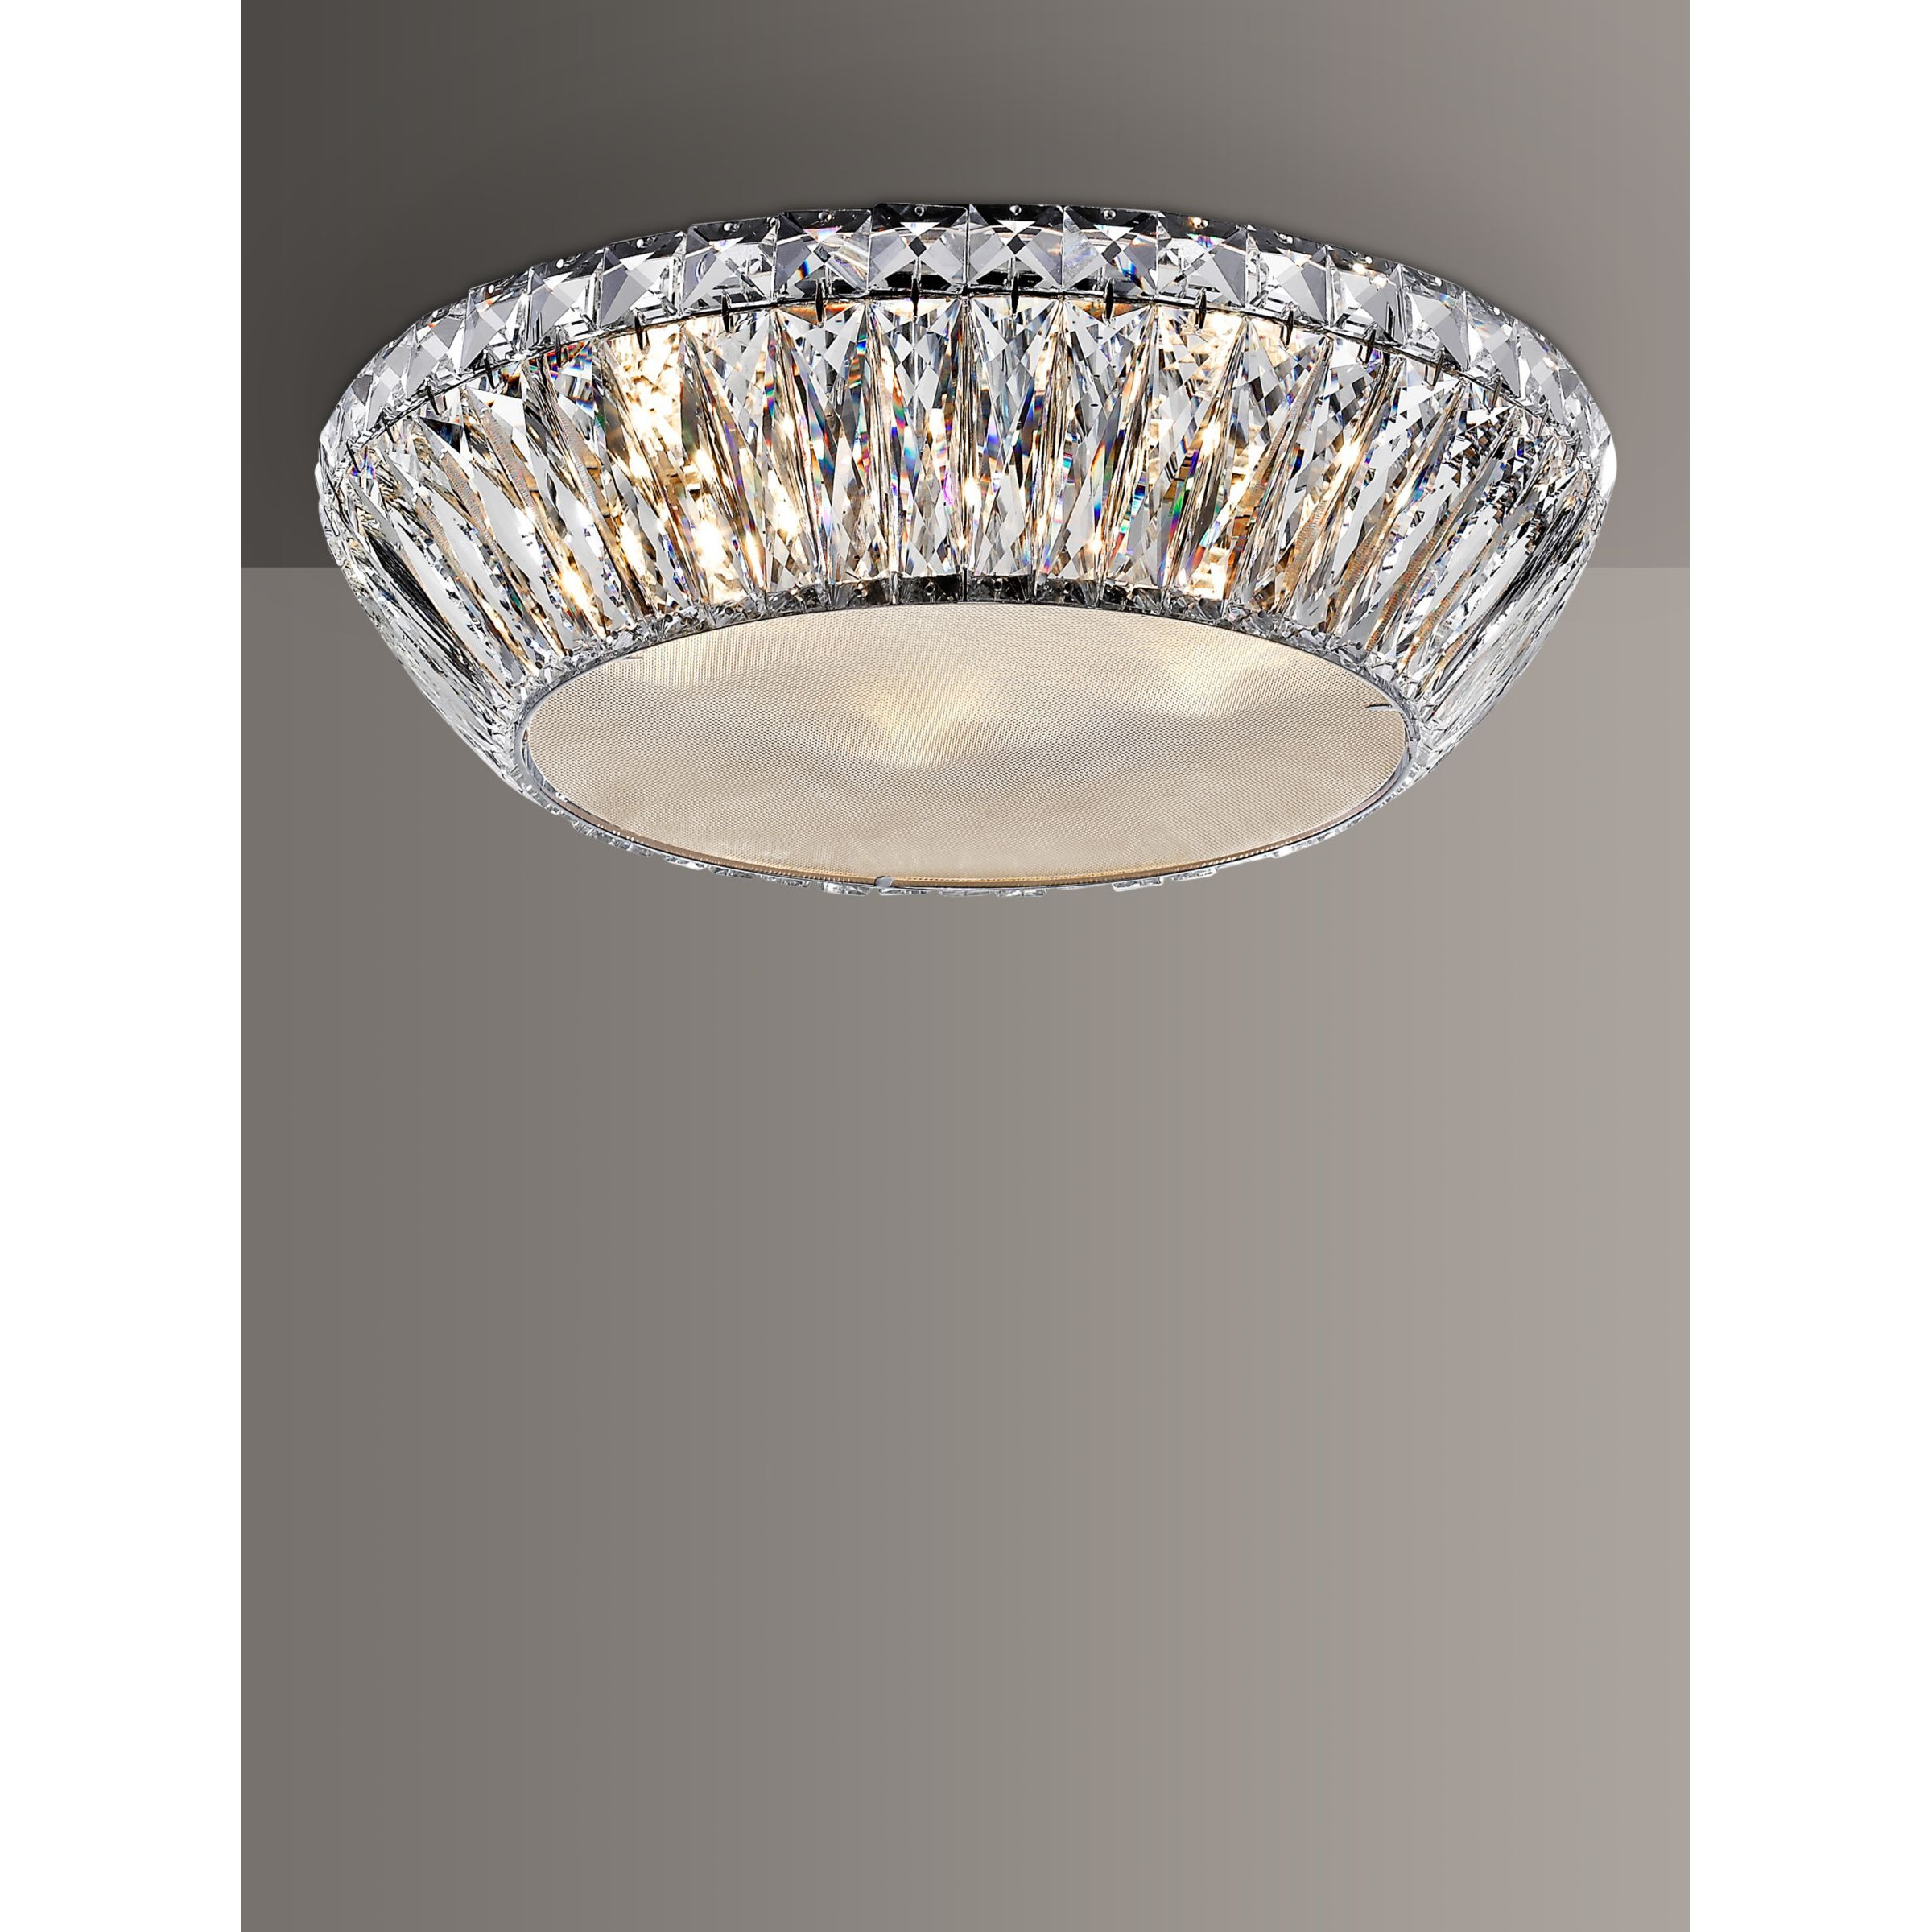 Impex Armel LED Crystal Semi Flush Small Ceiling Light, Clear/Chrome